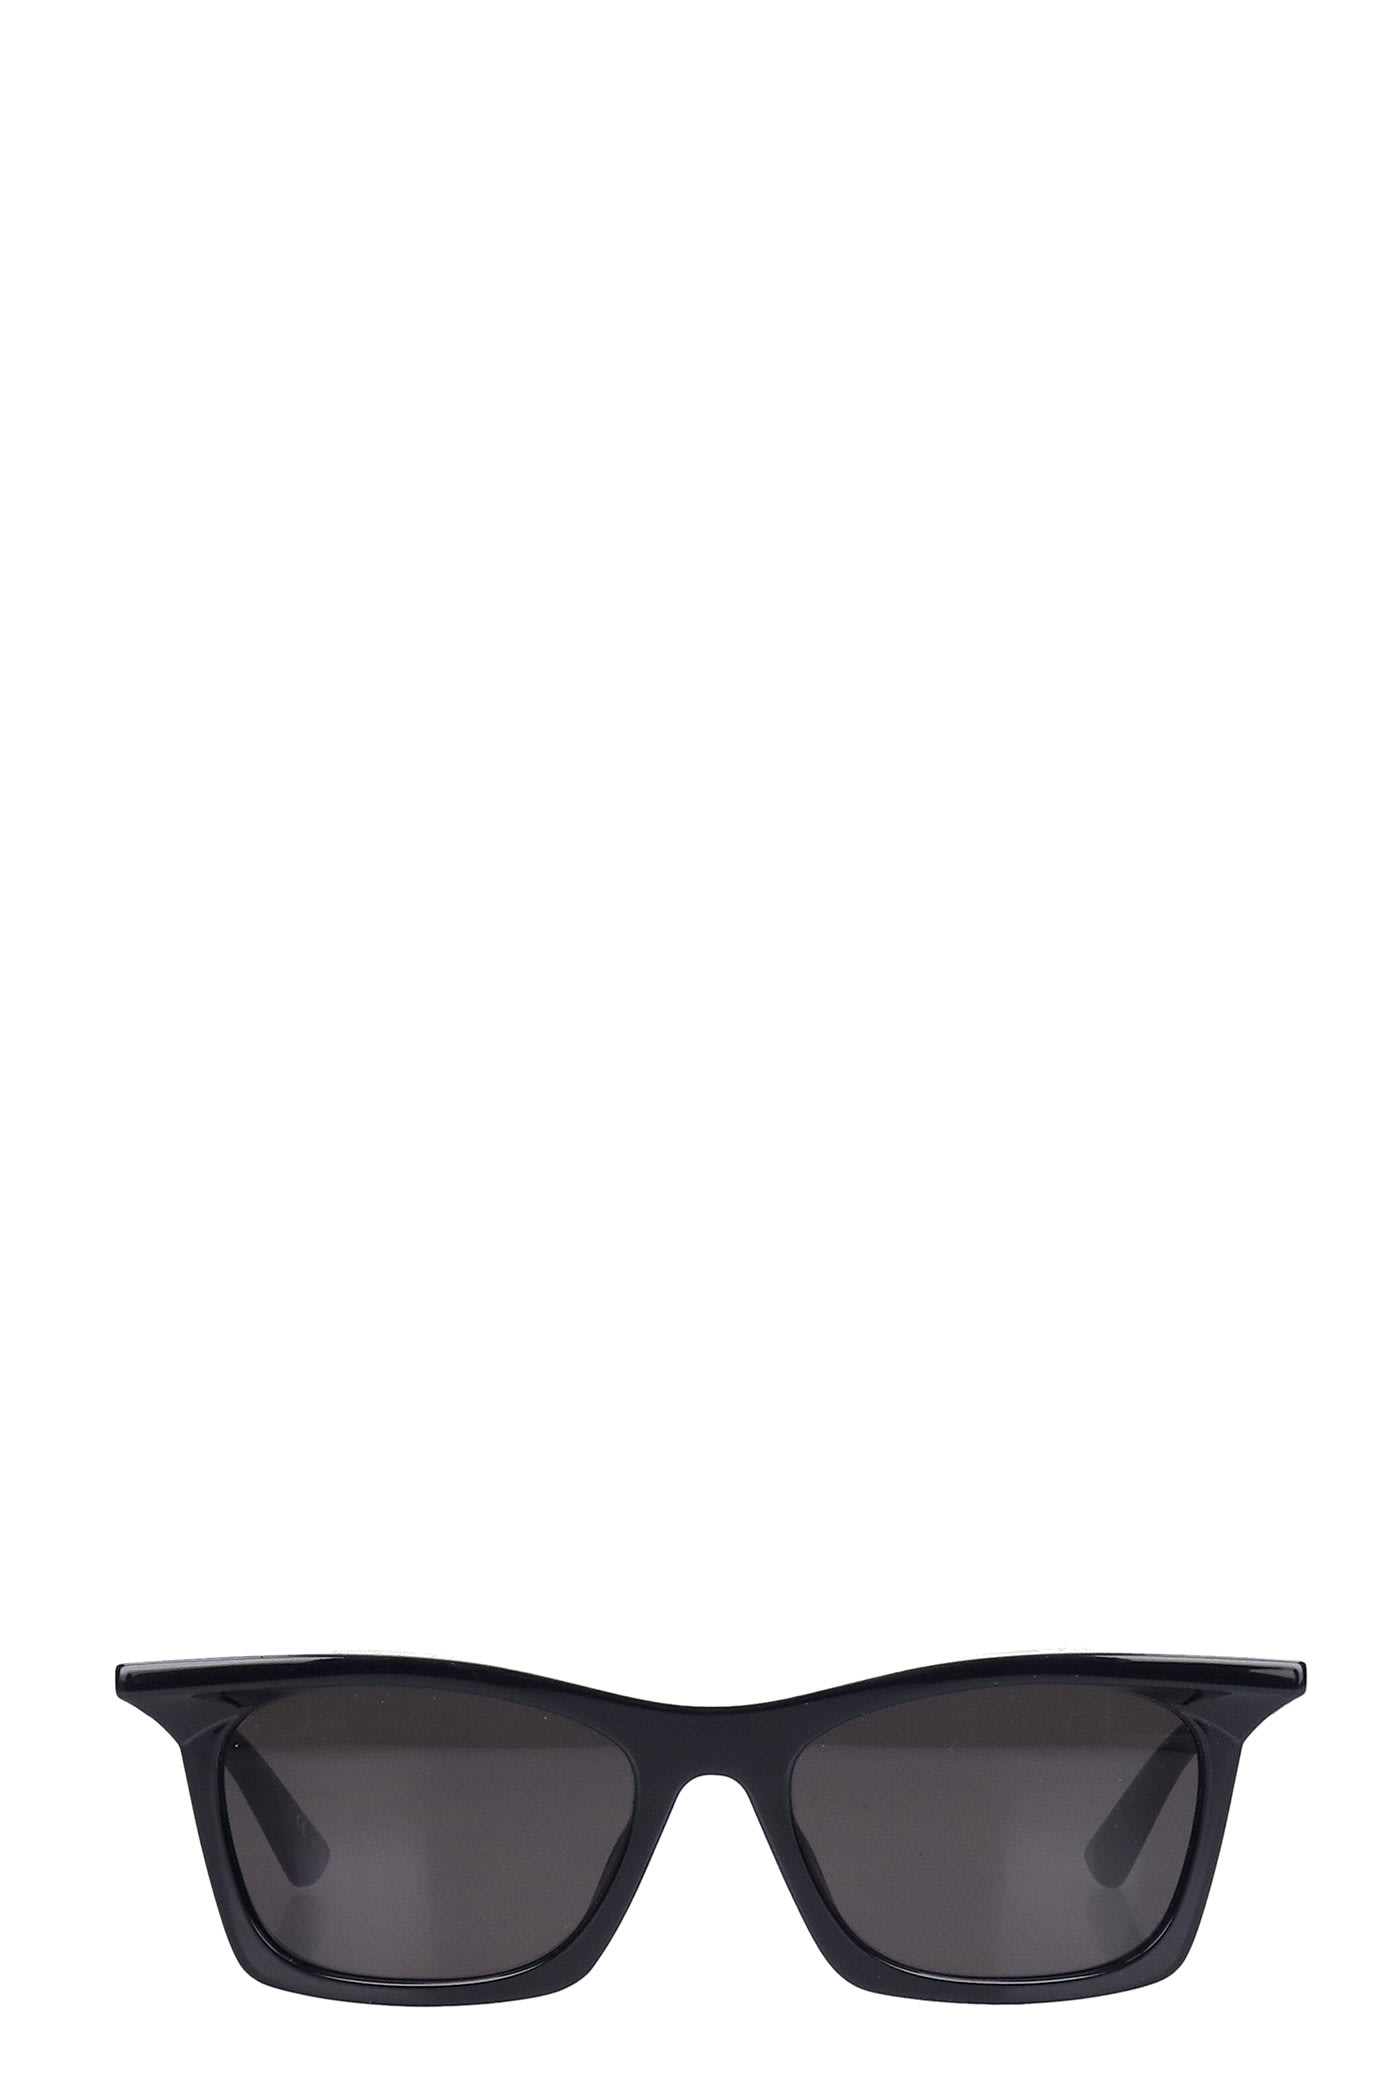 Balenciaga Tip Rectangle Sunglasses In Black Acetate